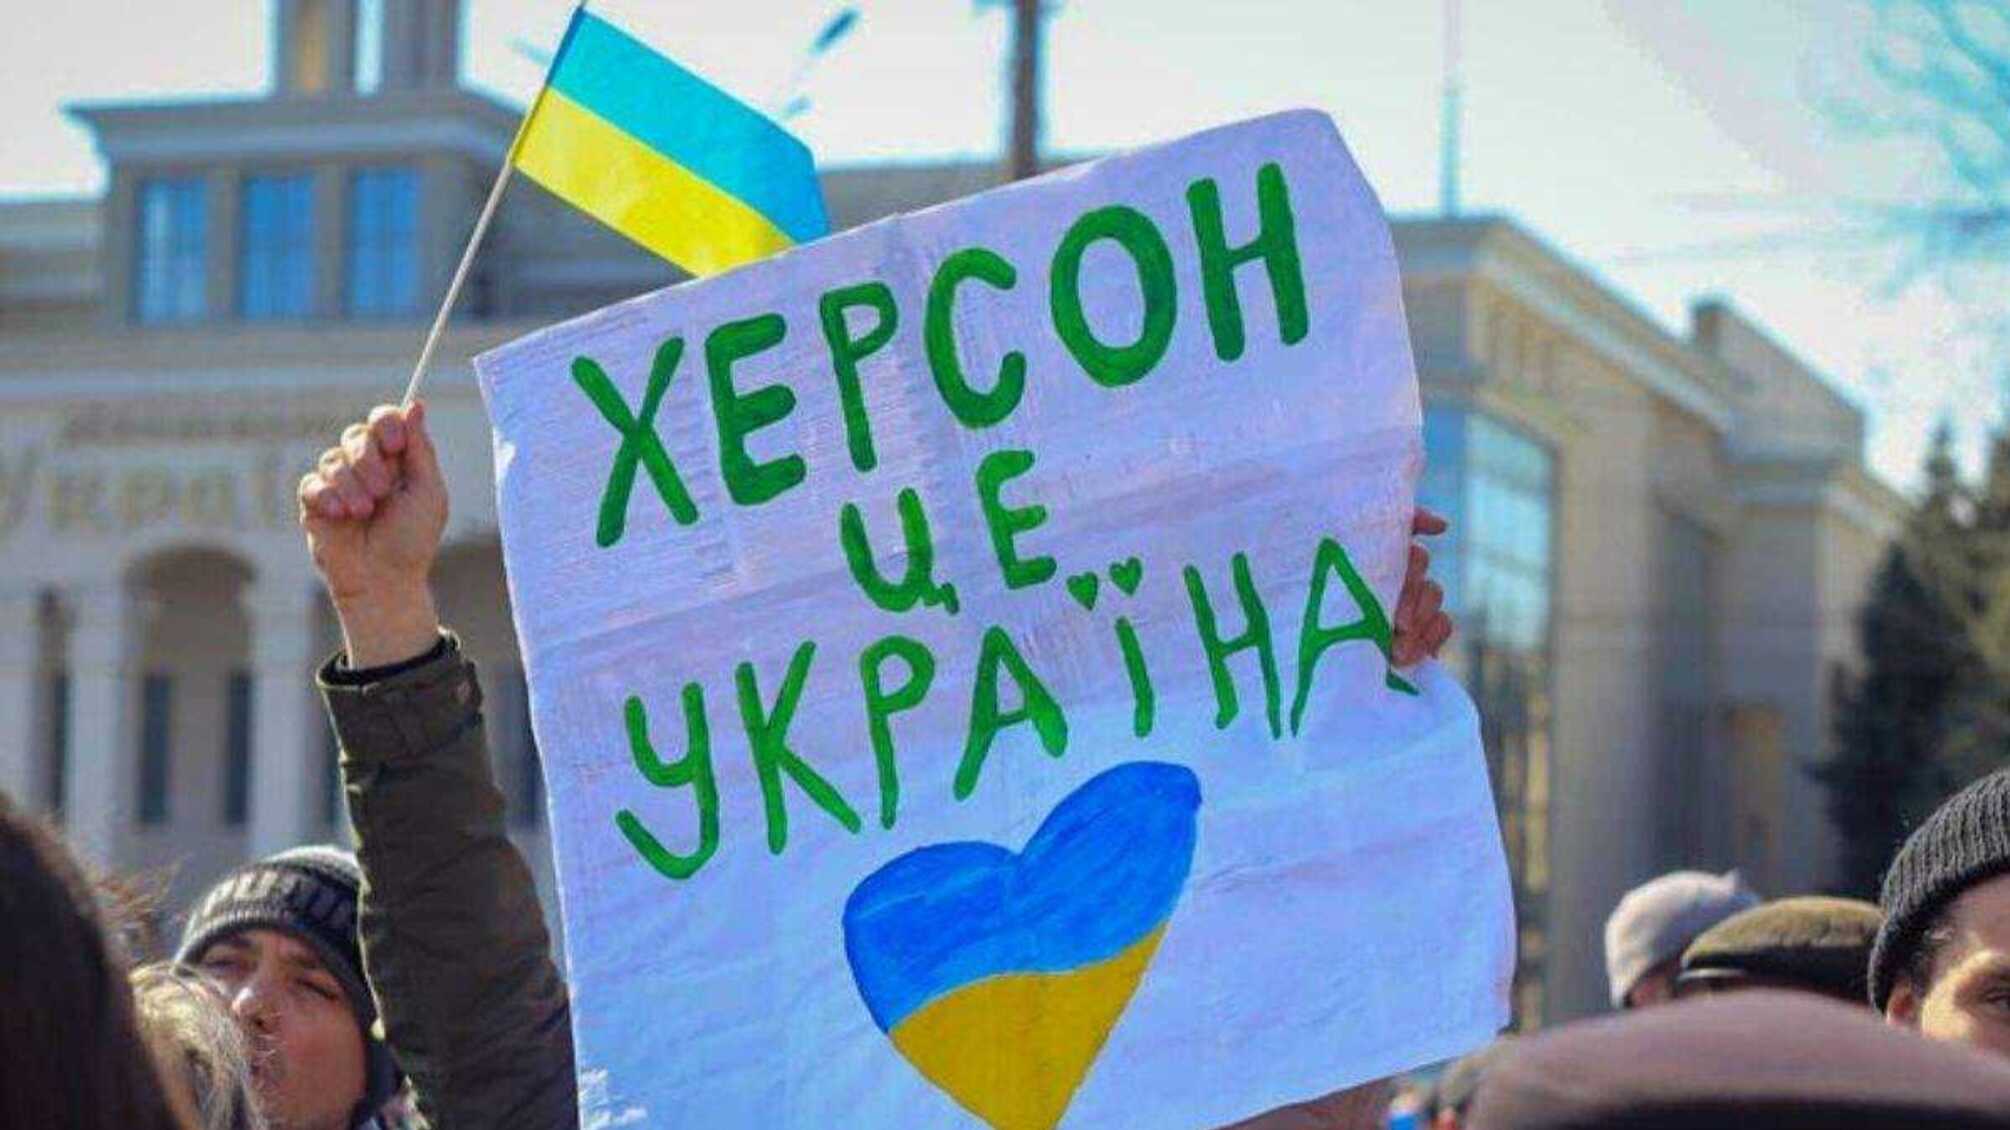 плакат Херсон это Украина